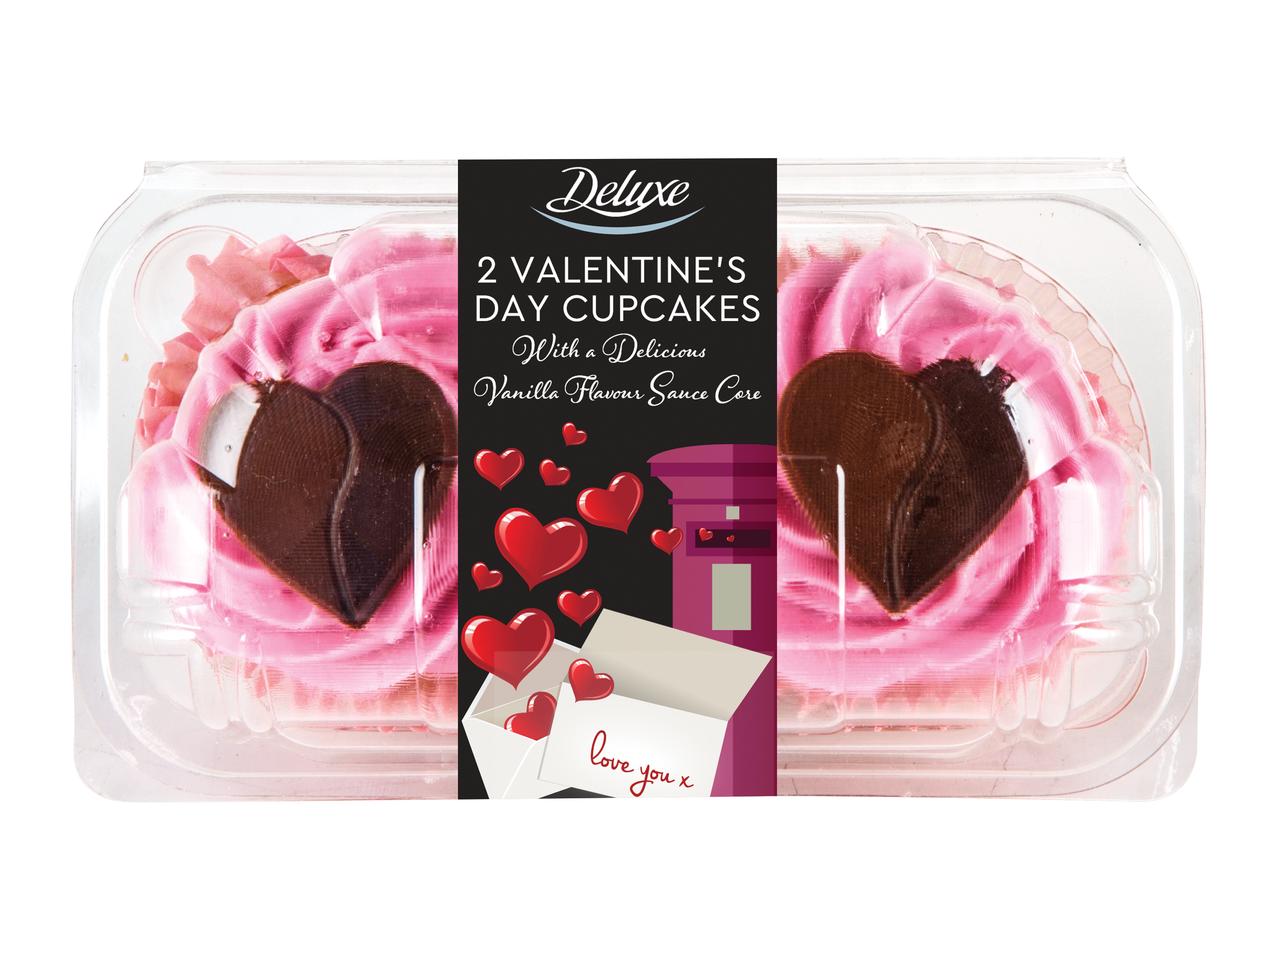 DELUXE 2 Valentine's Day Cupcakes